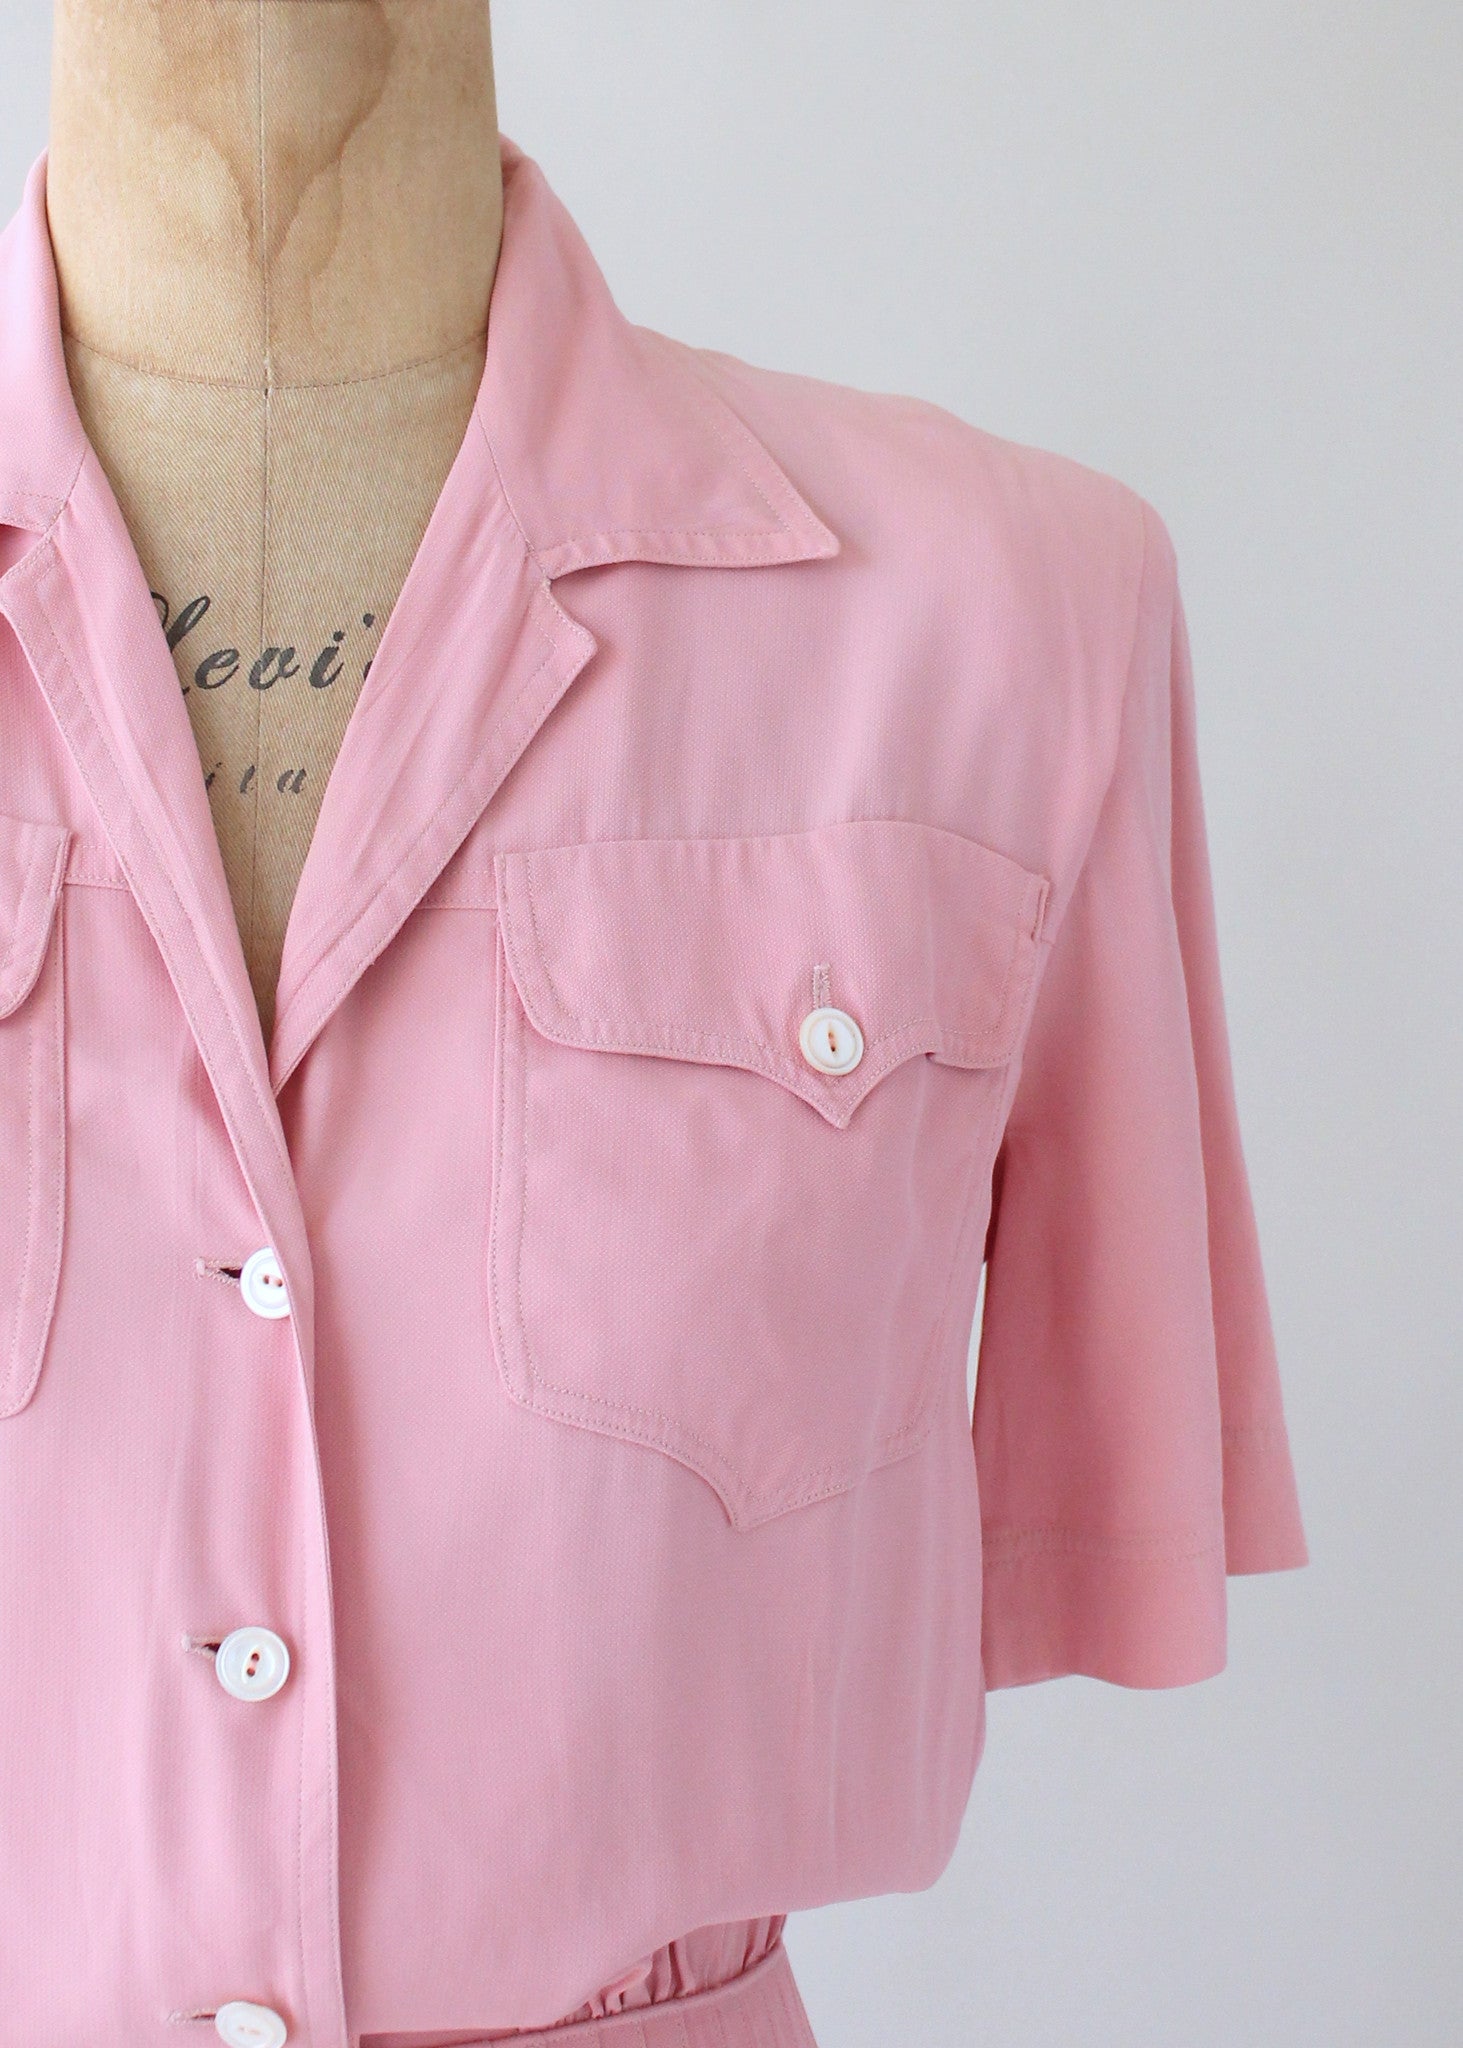 Vintage 1940s Pink Rayon Sportswear Dress - Raleigh Vintage